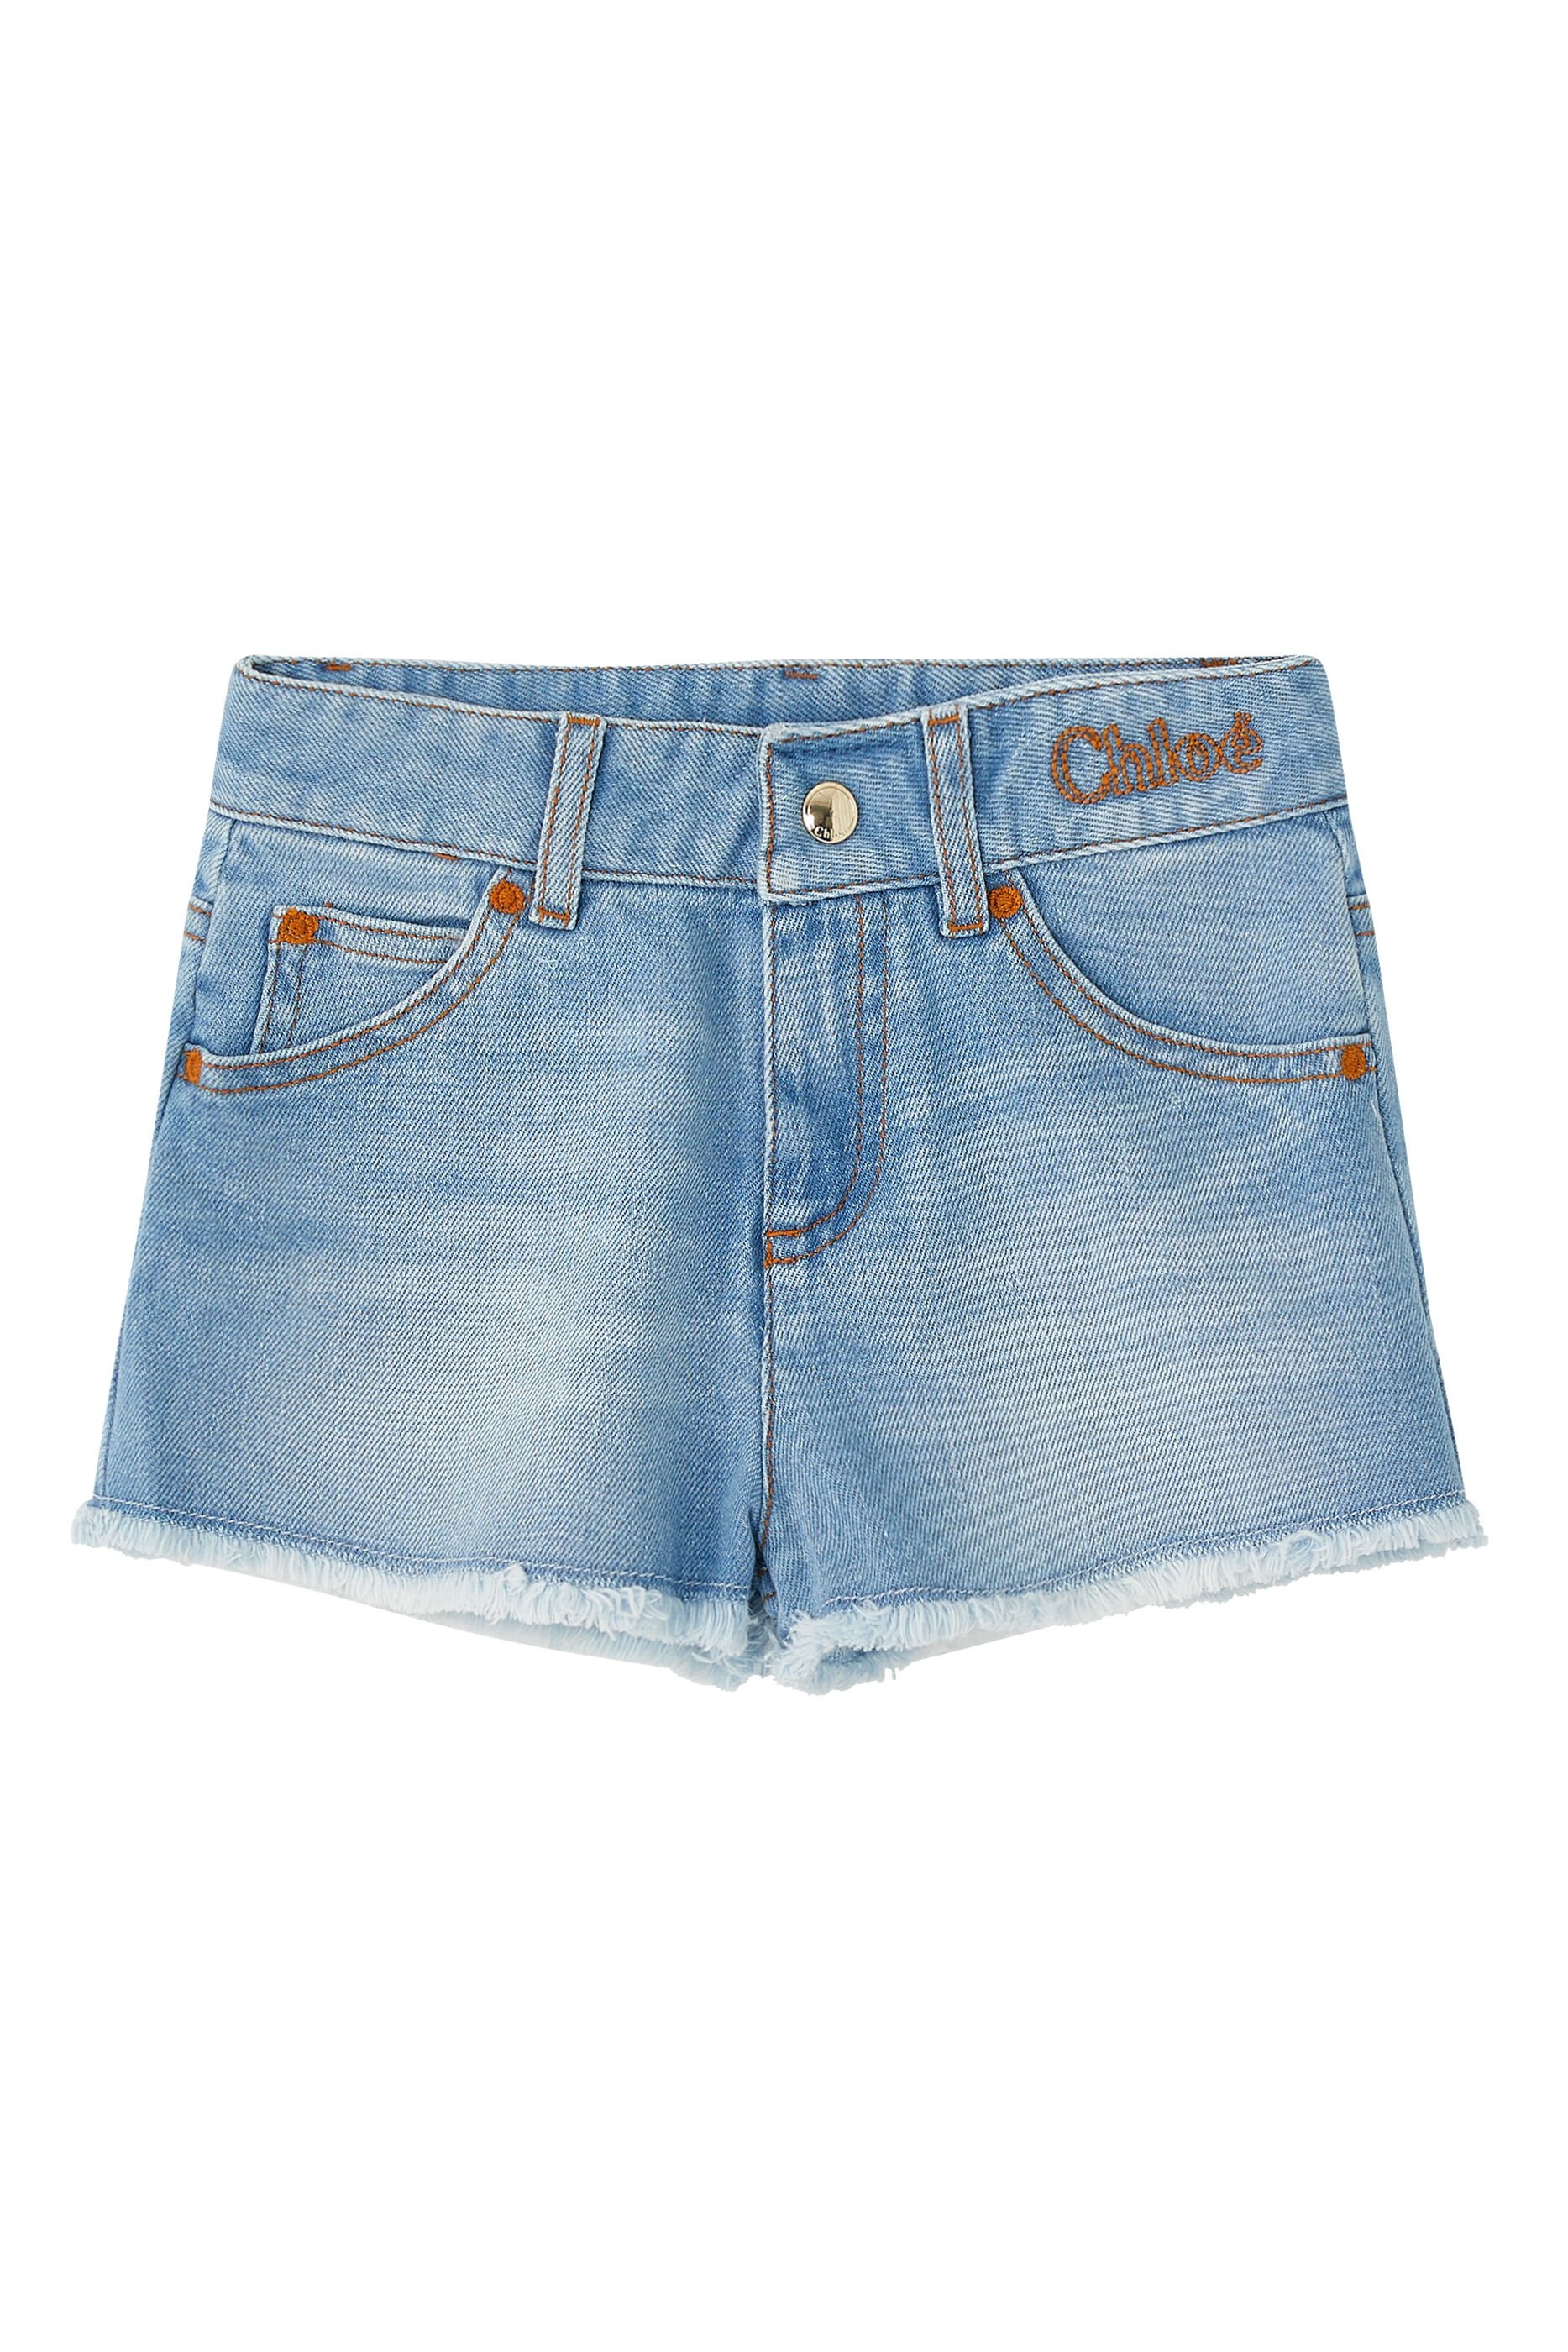 Chloé Kids logo-embroidered fringed denim shorts - Blue